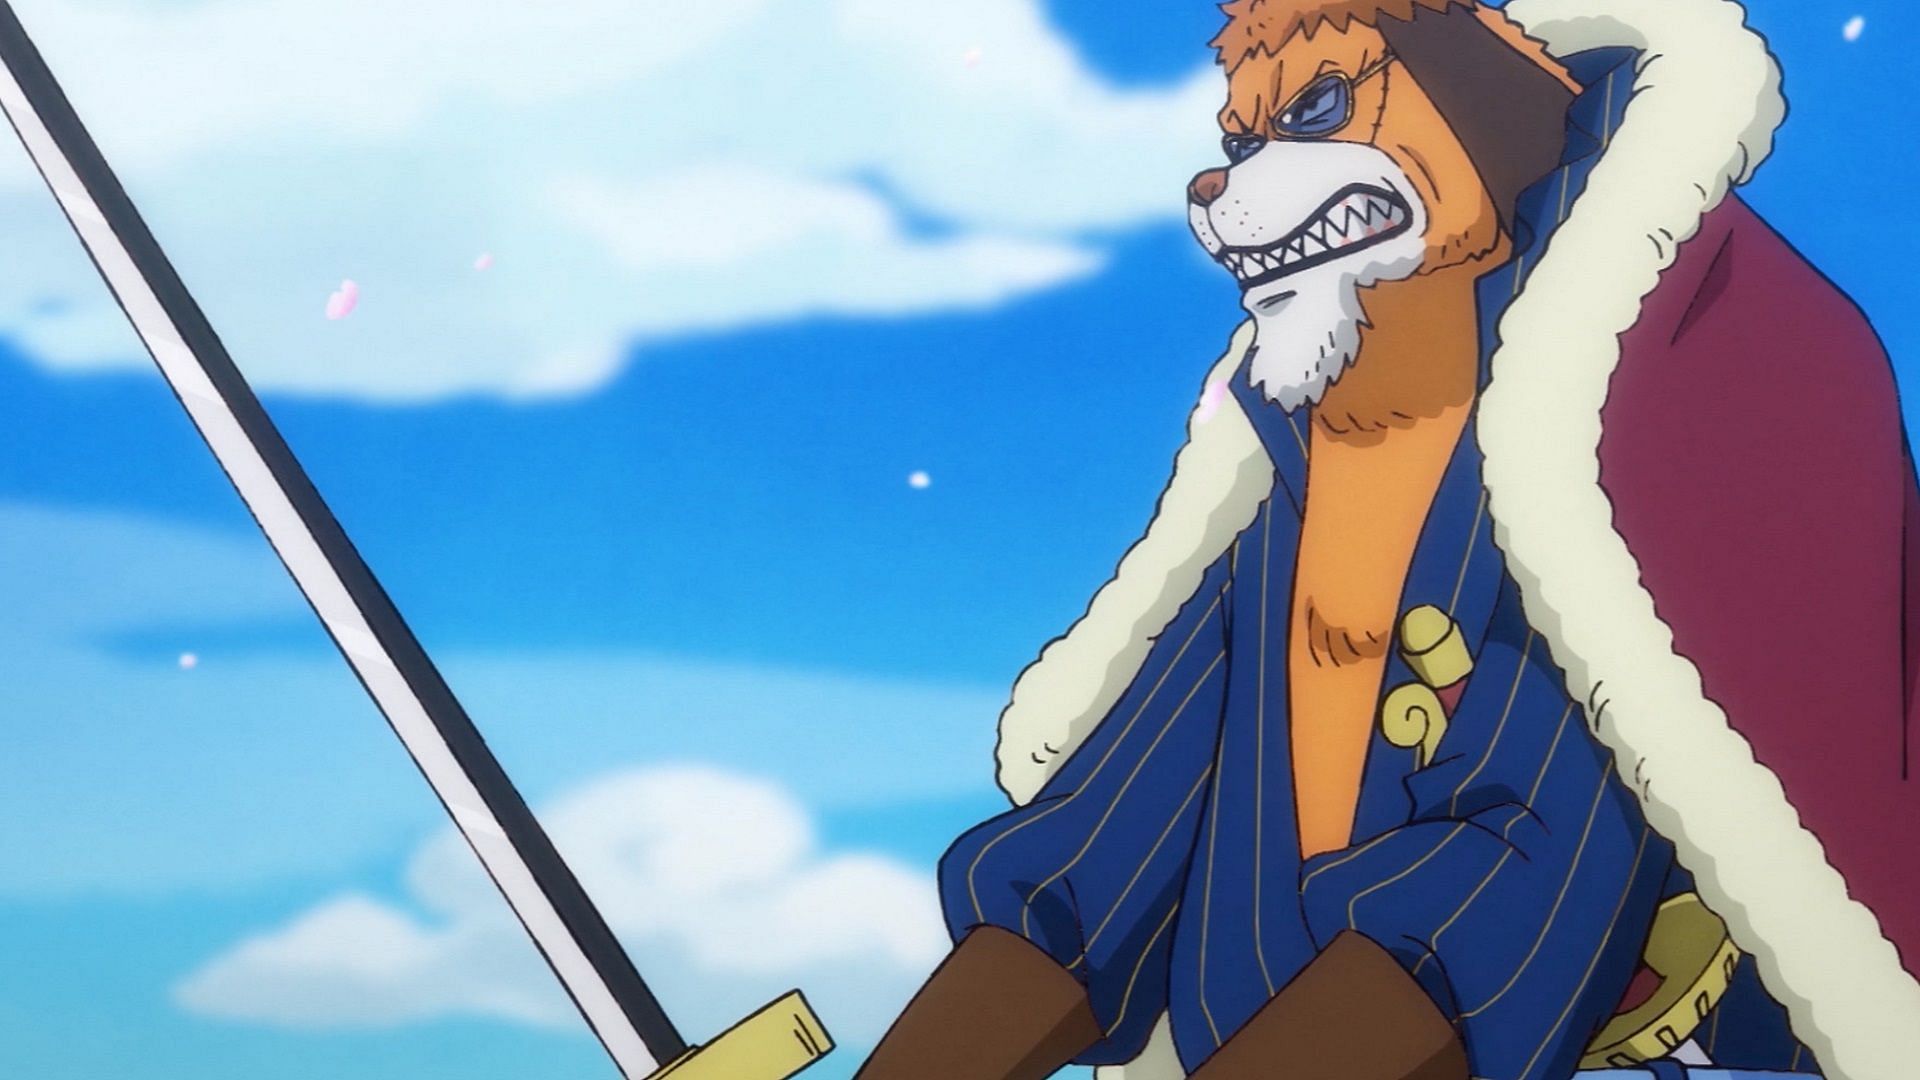 Inuarashi as seen in One Piece (Image via Toei Animation, One Piece)